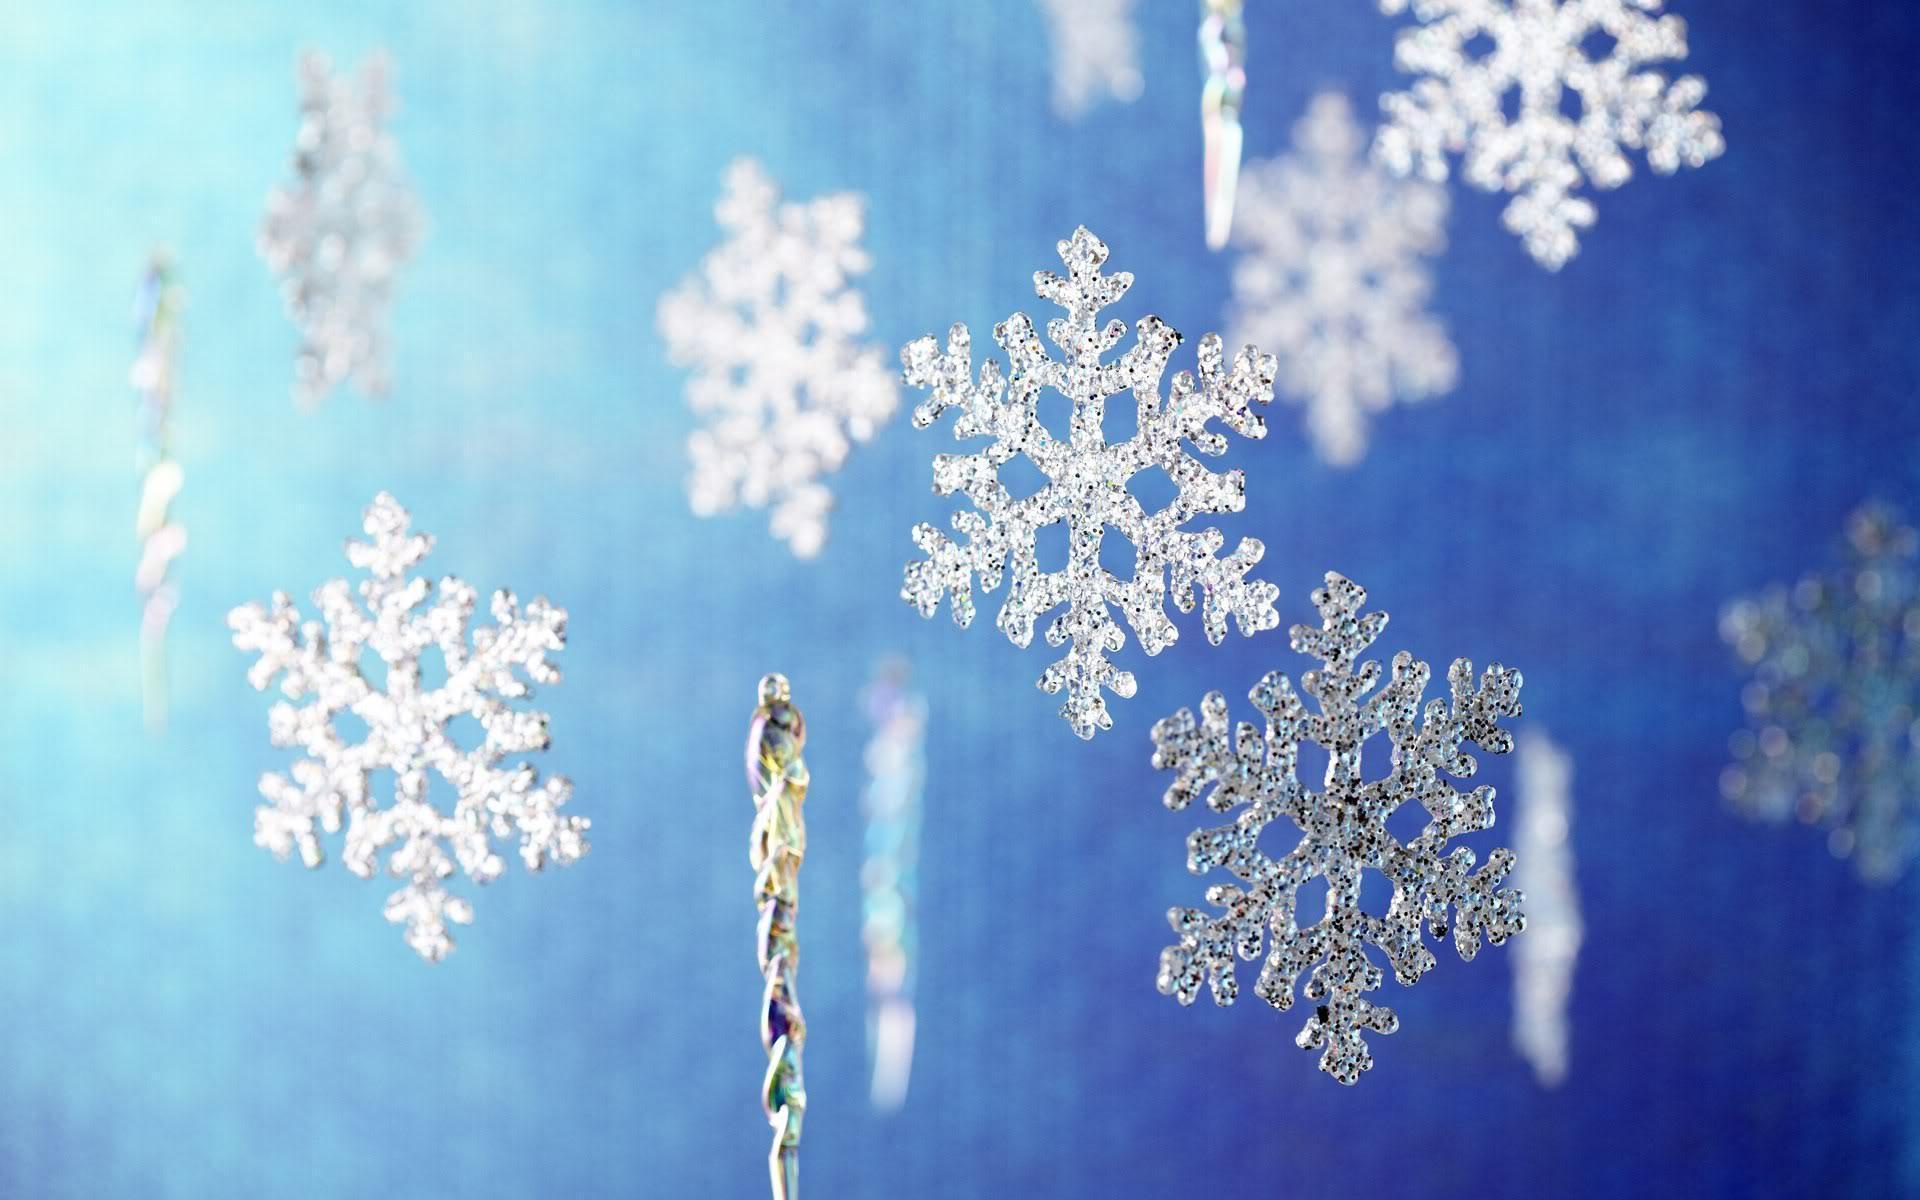 snowflake desktop wallpaper